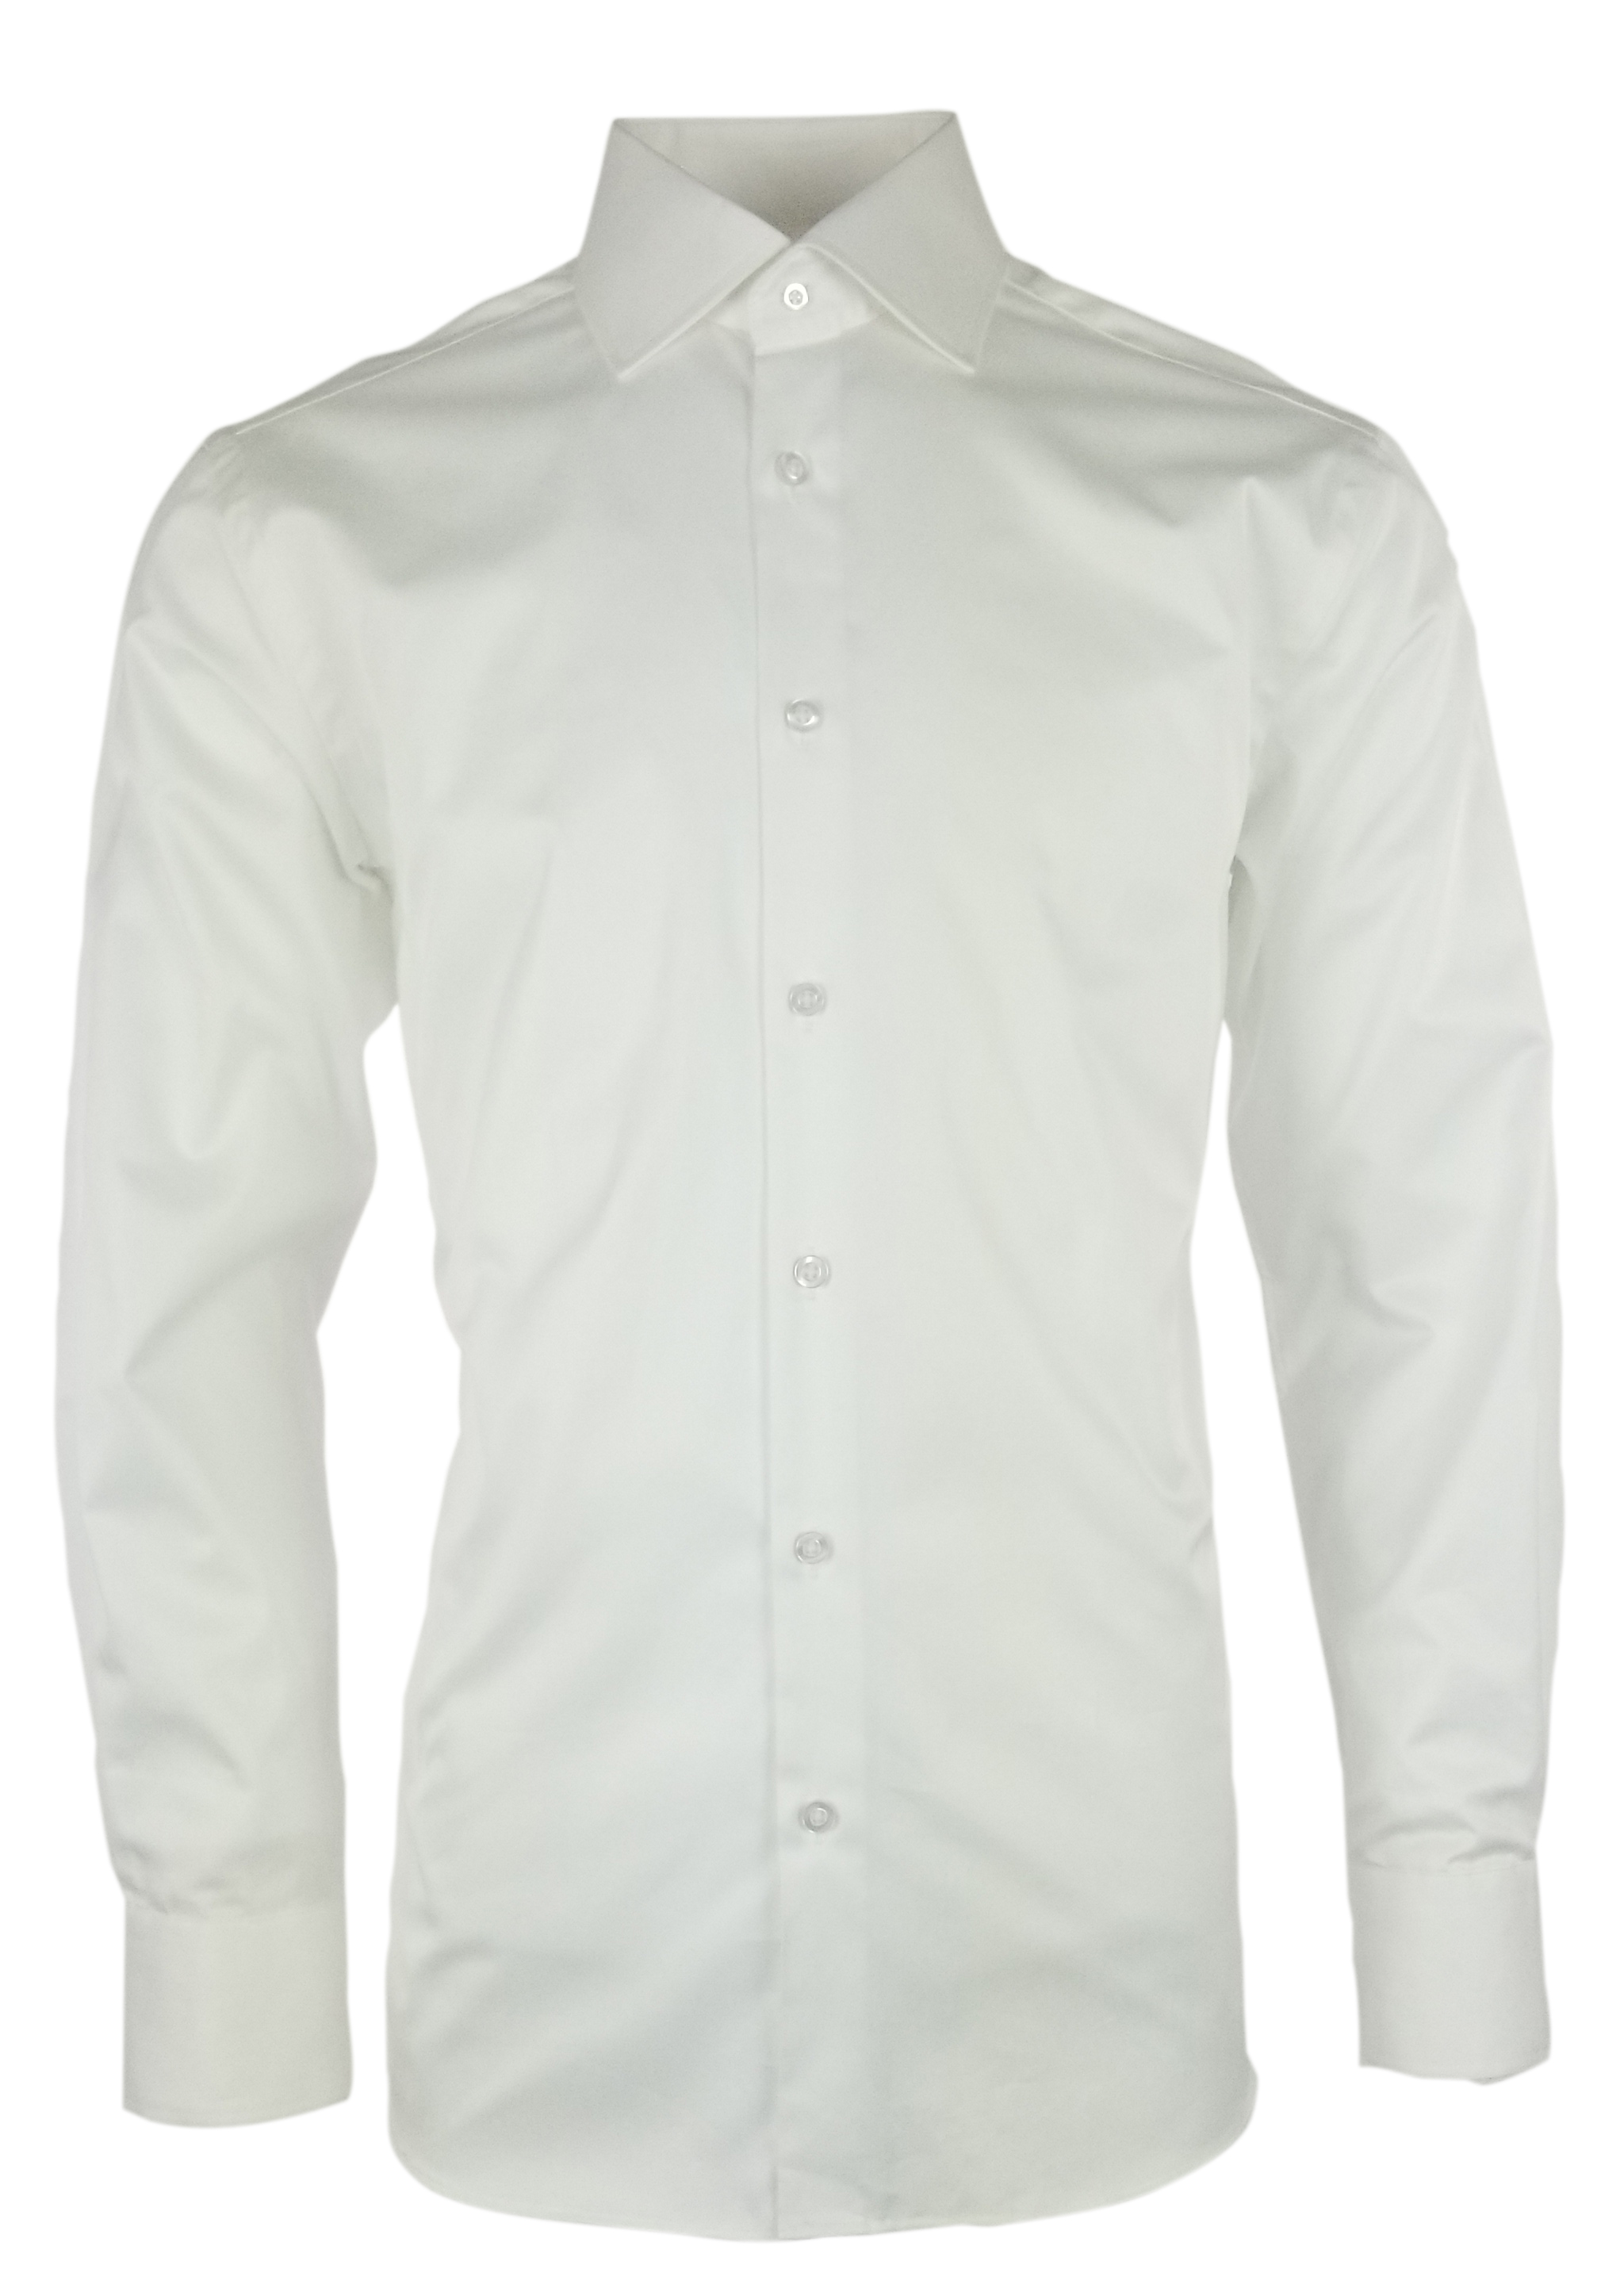 white long sleeve tee shirt dress